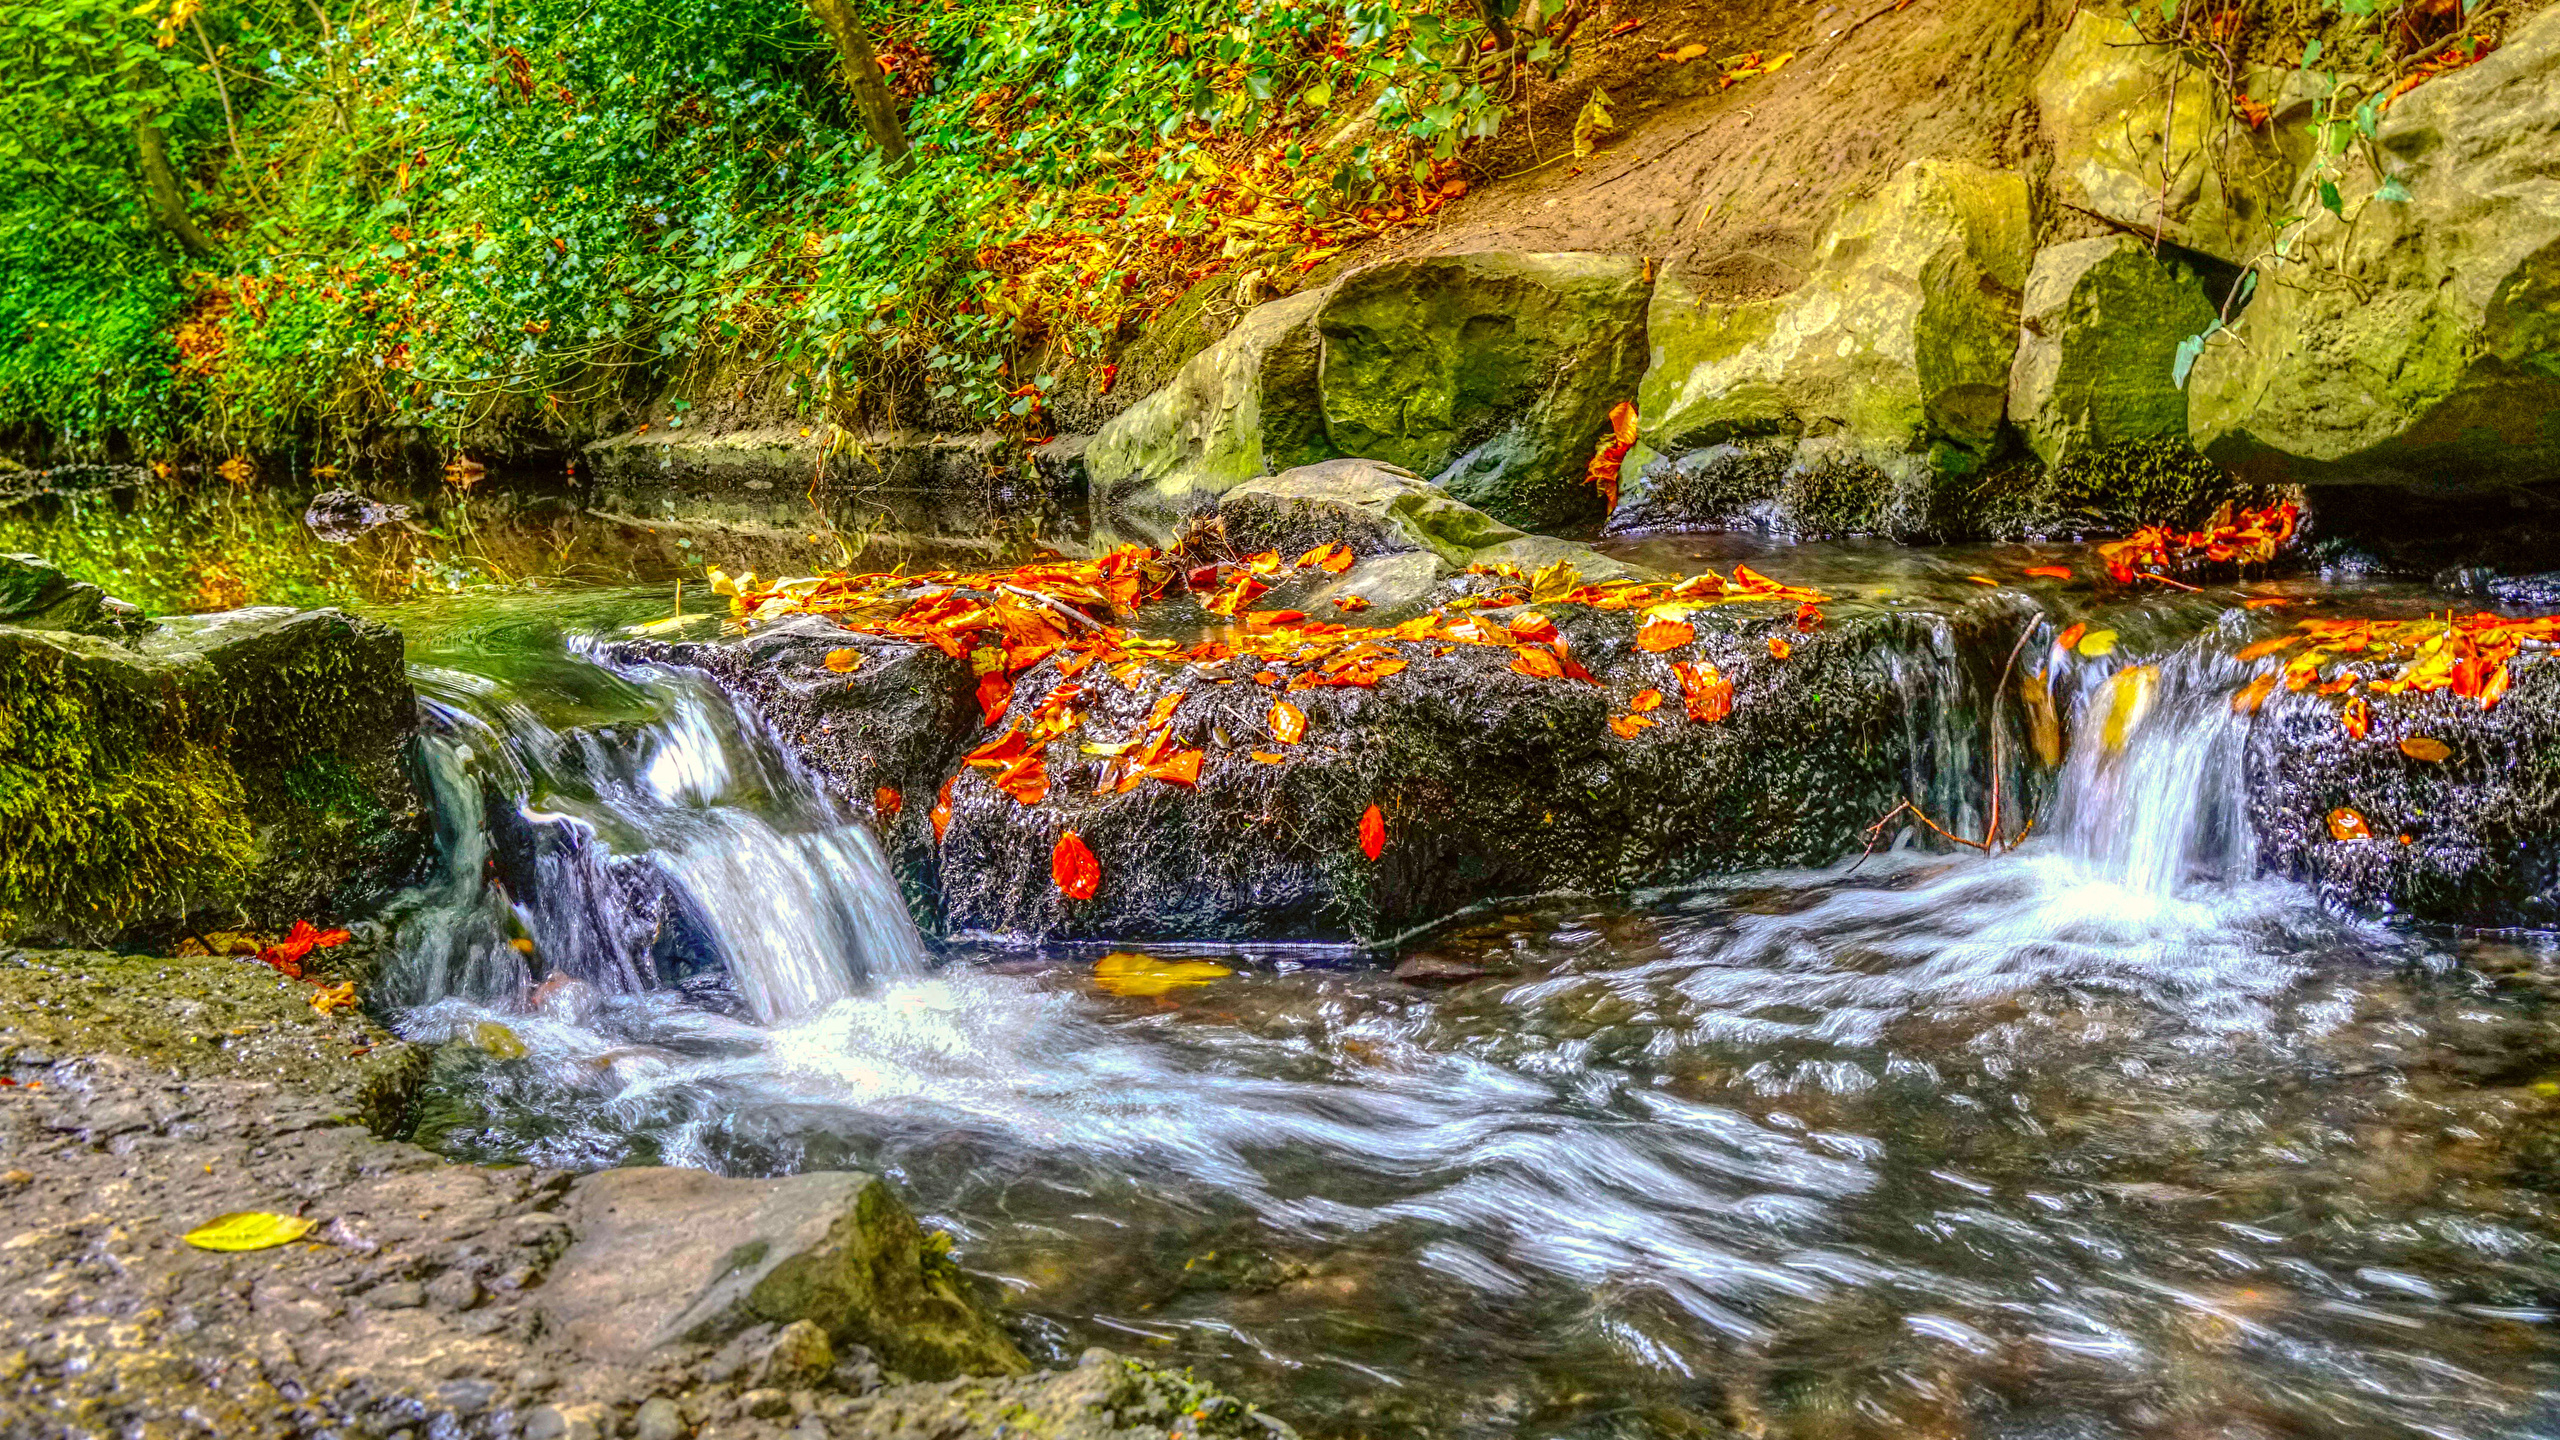 navn Agurk Assassin Photo Nature Dublin Ireland HDRI Creek Autumn Foliage 2560x1440